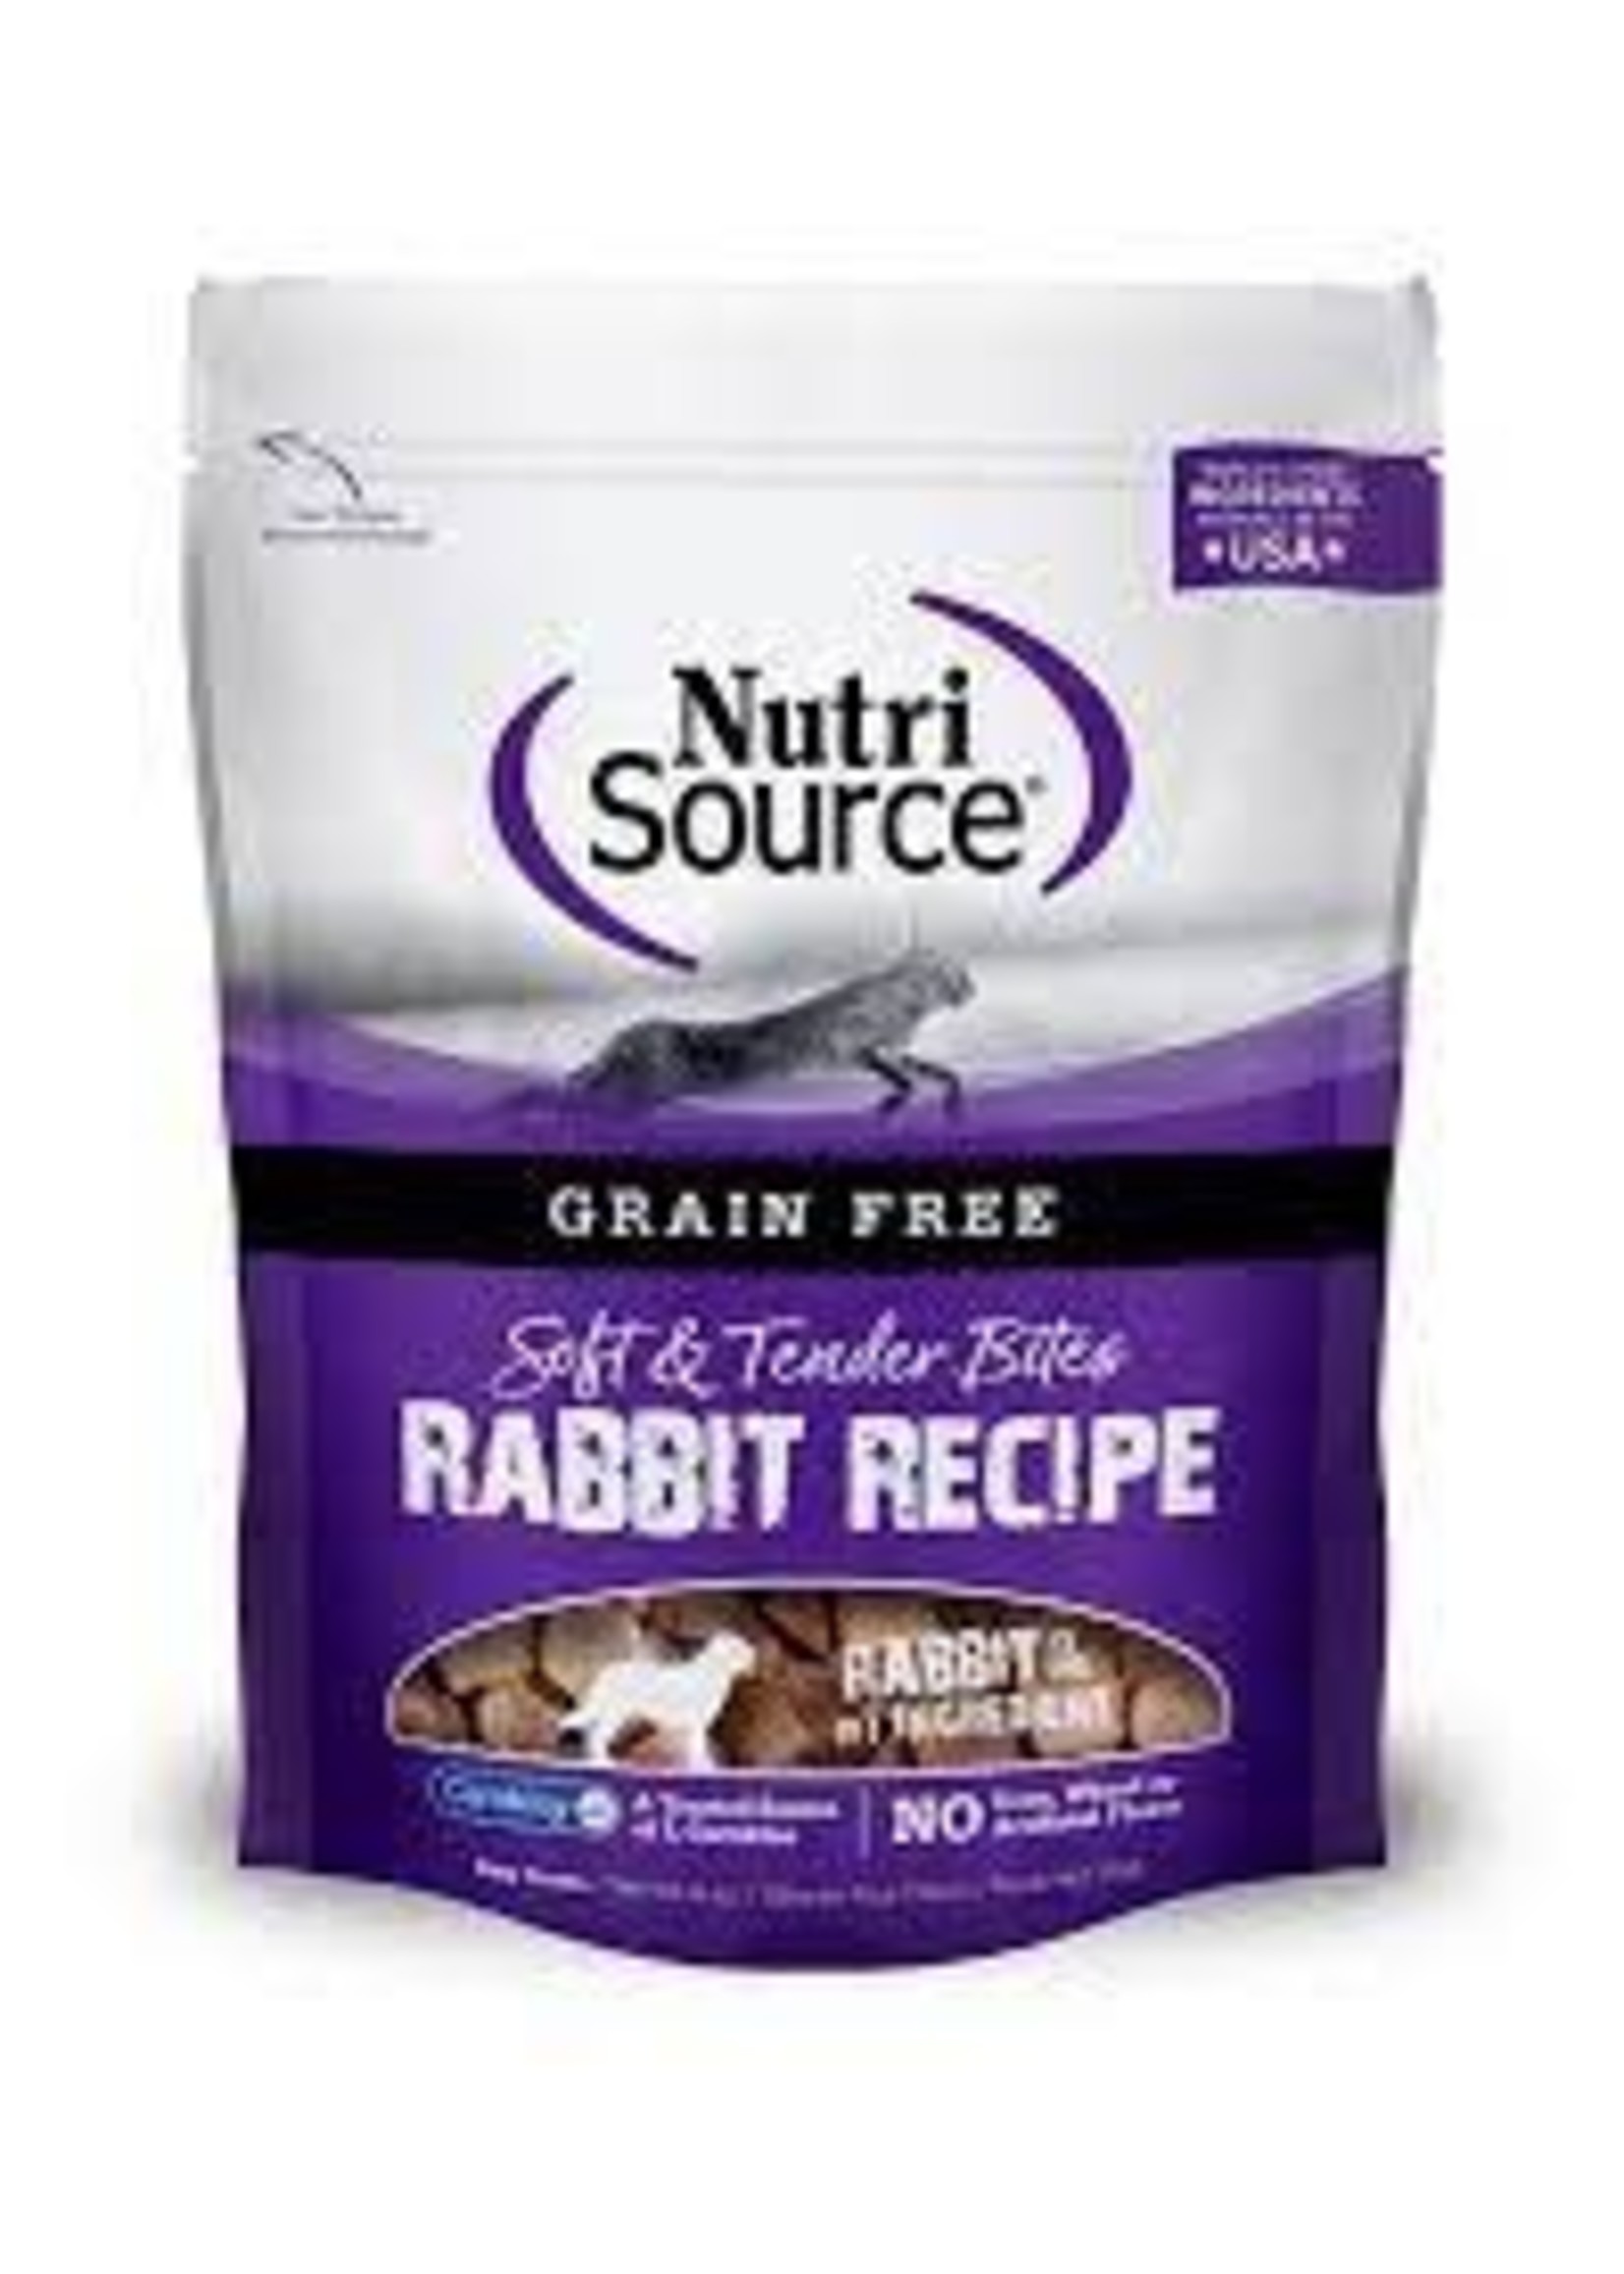 Nutri-source NutriSource Soft & Tender Treats